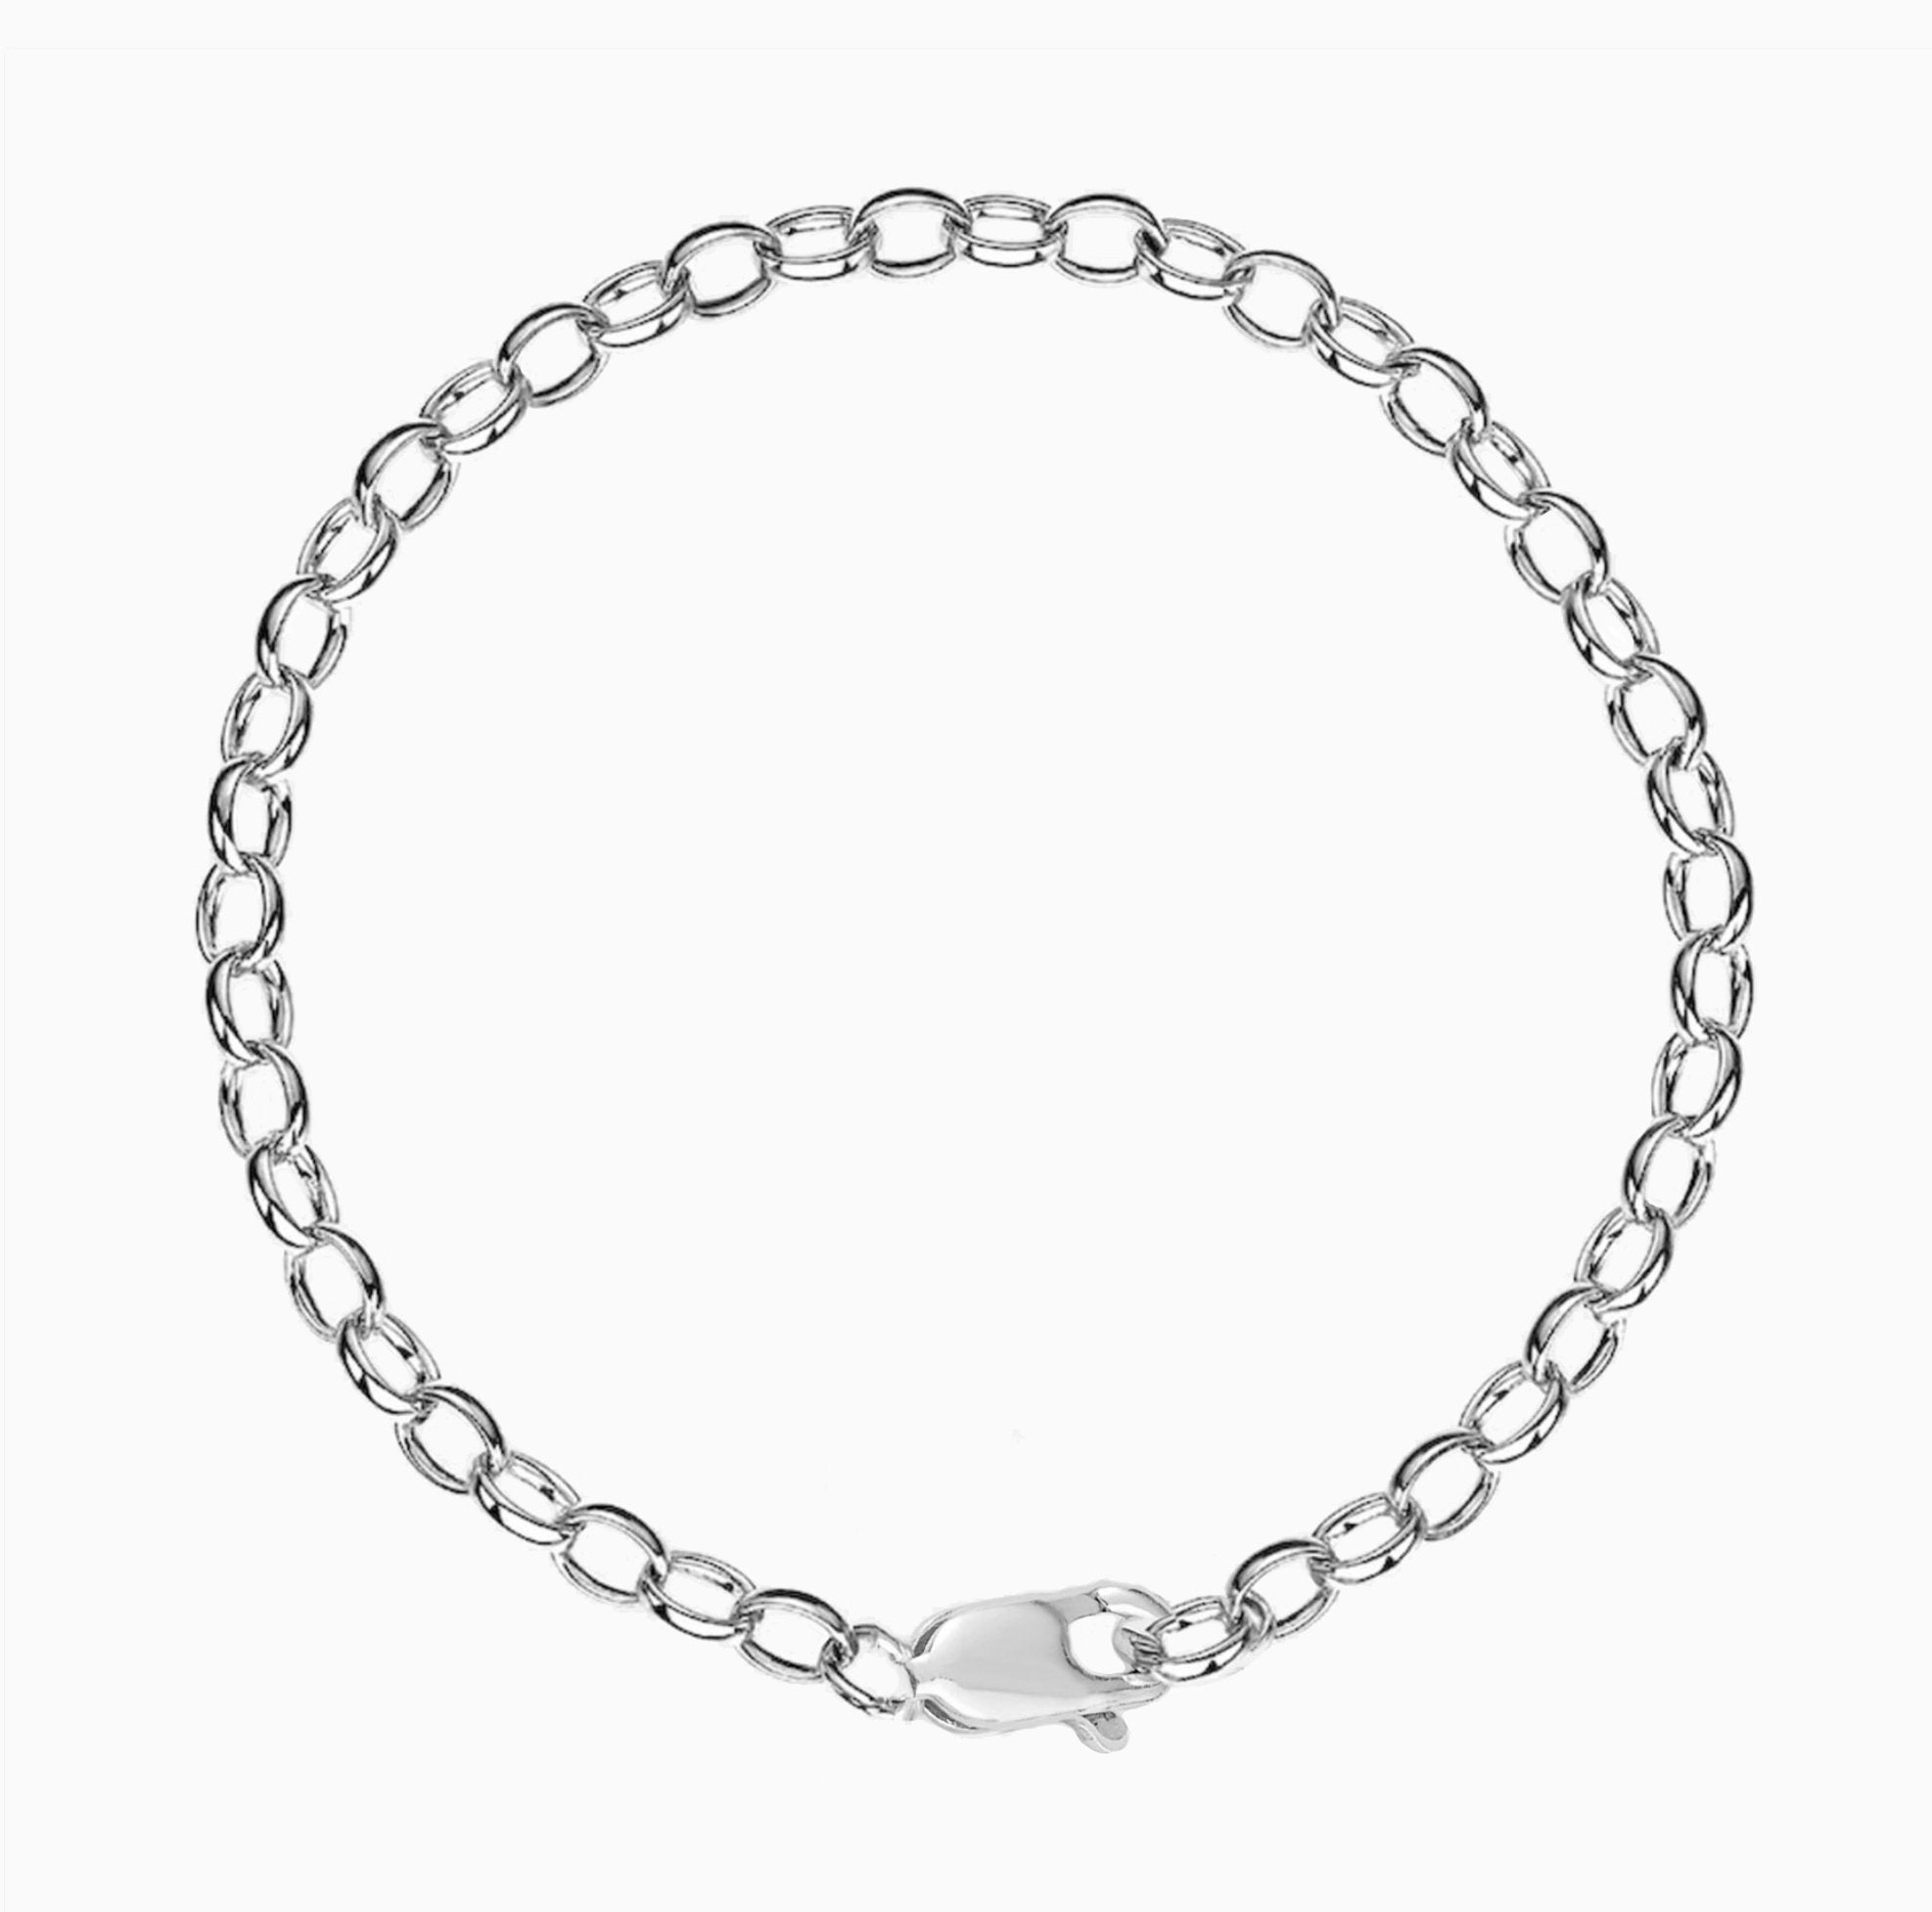 Product title: Fine Silver Locket Bracelet, product type: Bracelet